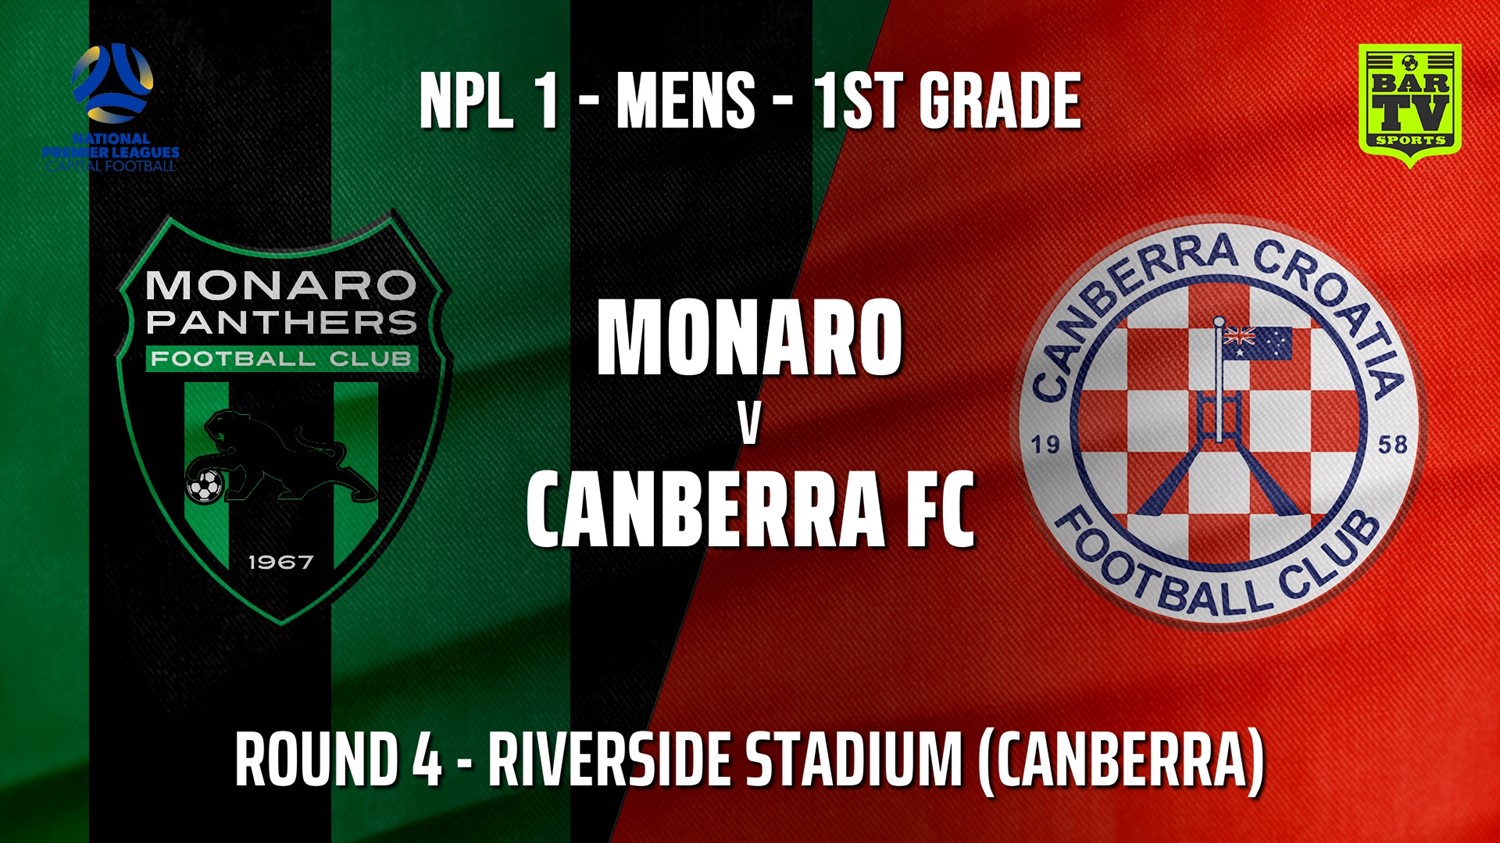 210501-NPL - CAPITAL Round 4 - Monaro Panthers FC v Canberra FC Minigame Slate Image